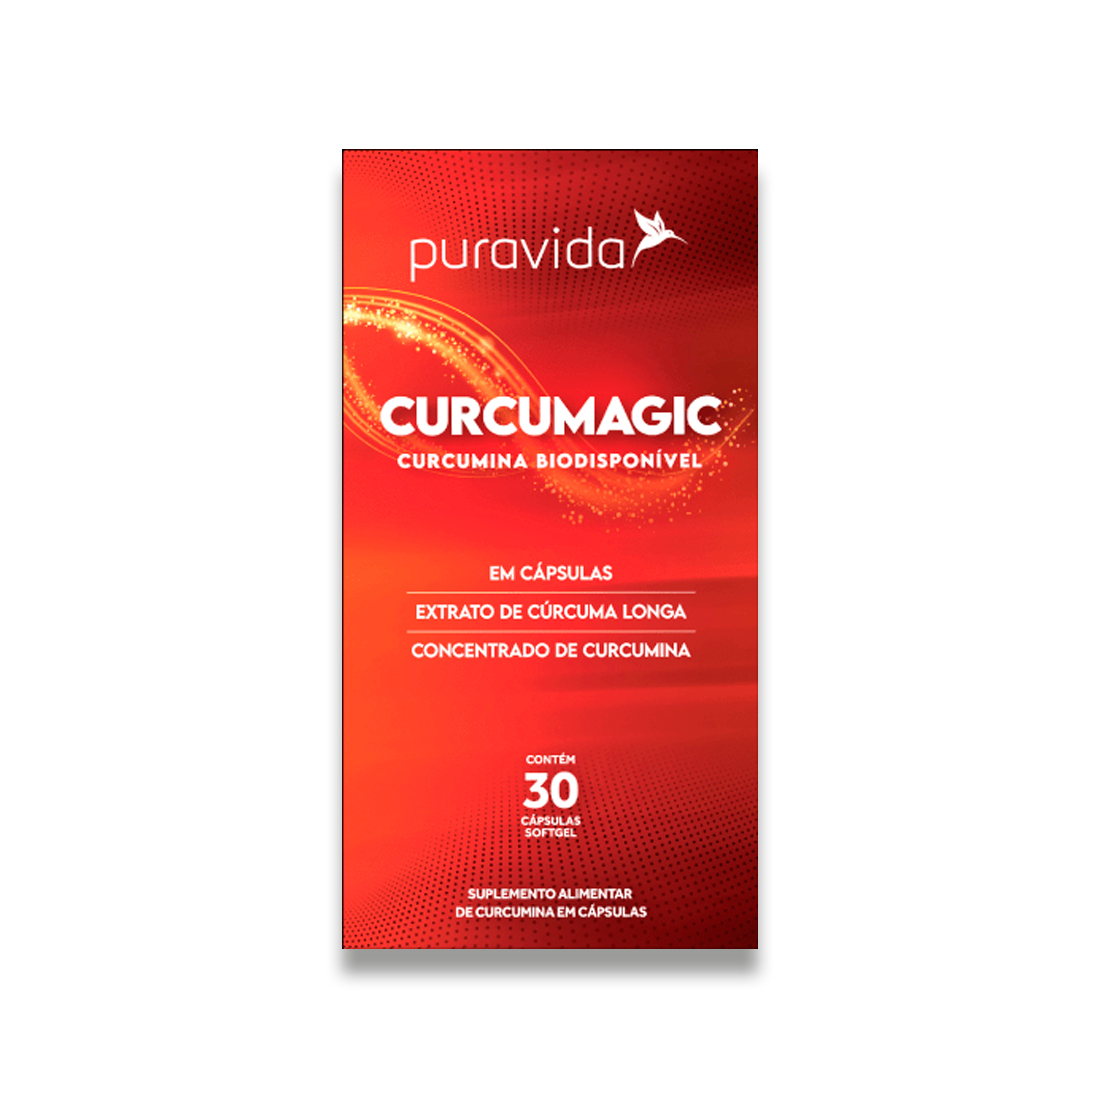 Curcumagic Curcumina Biodisponivel 30caps Puravida